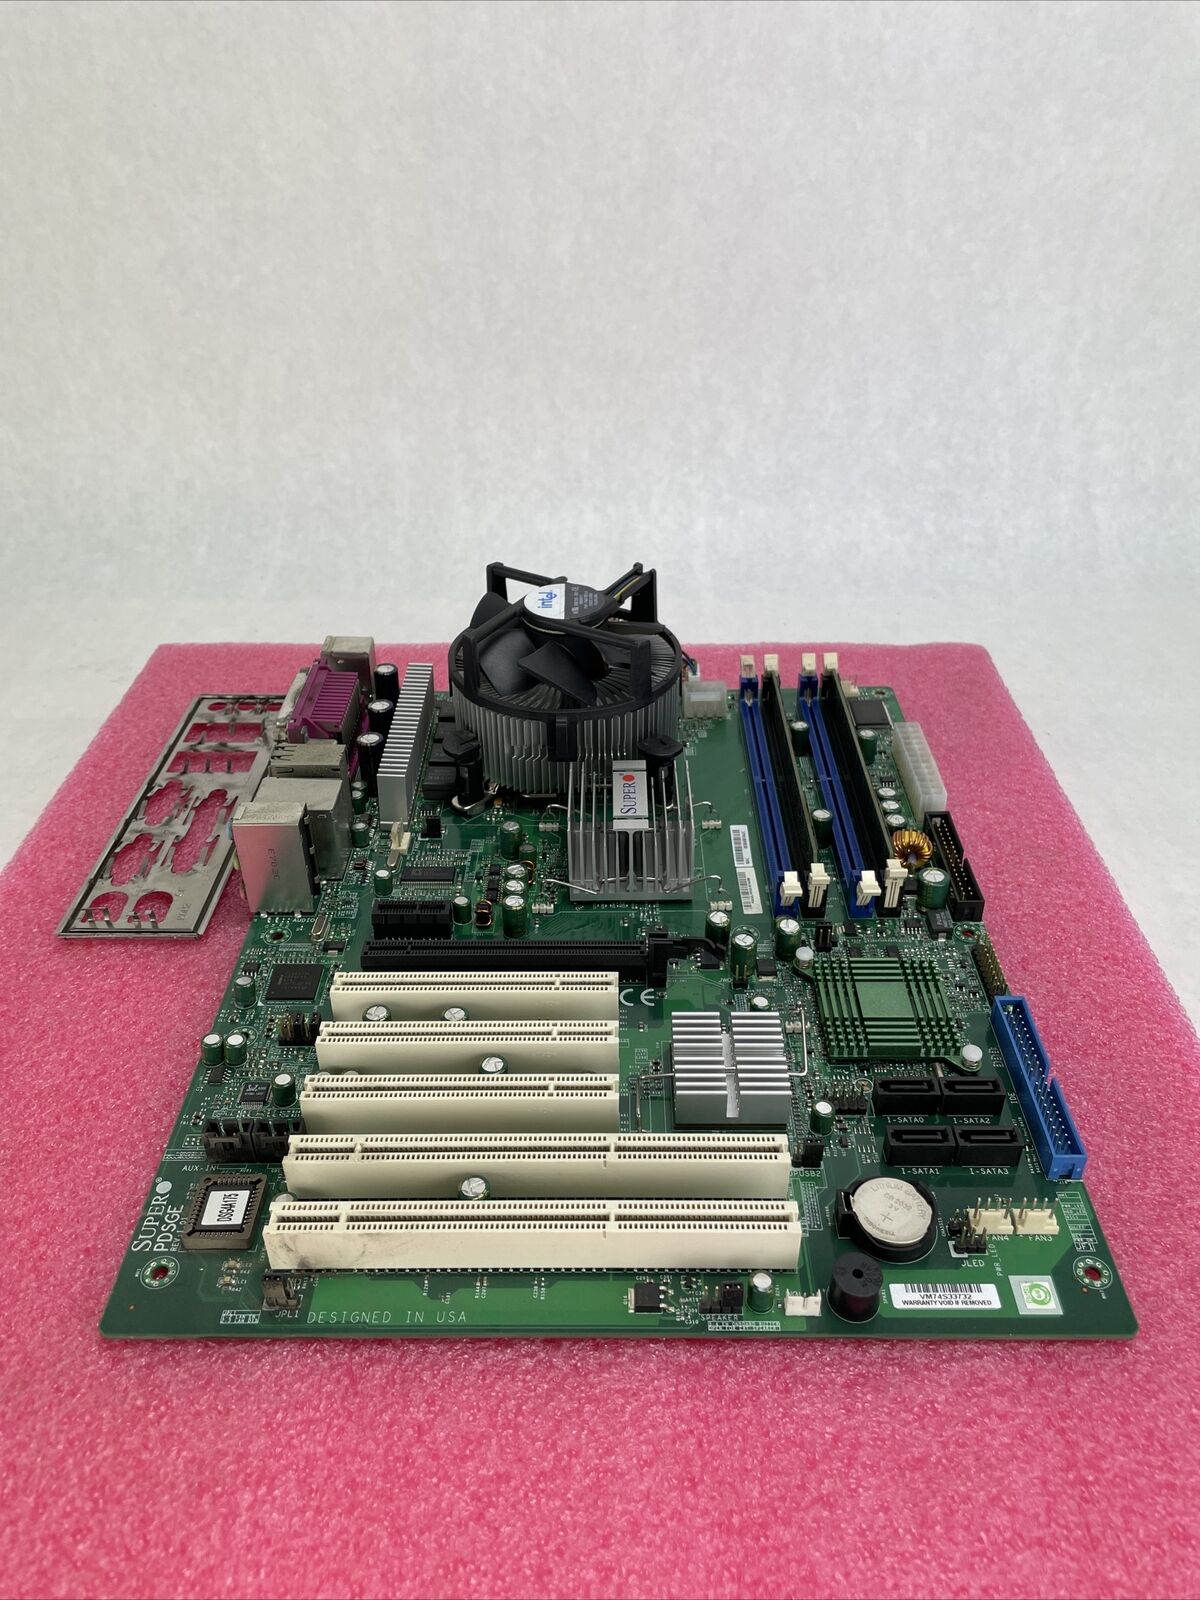 SuperMicro PDSG4 Motherboard Intel Pentium D 3.4GHz 2GB RAM w/Shield